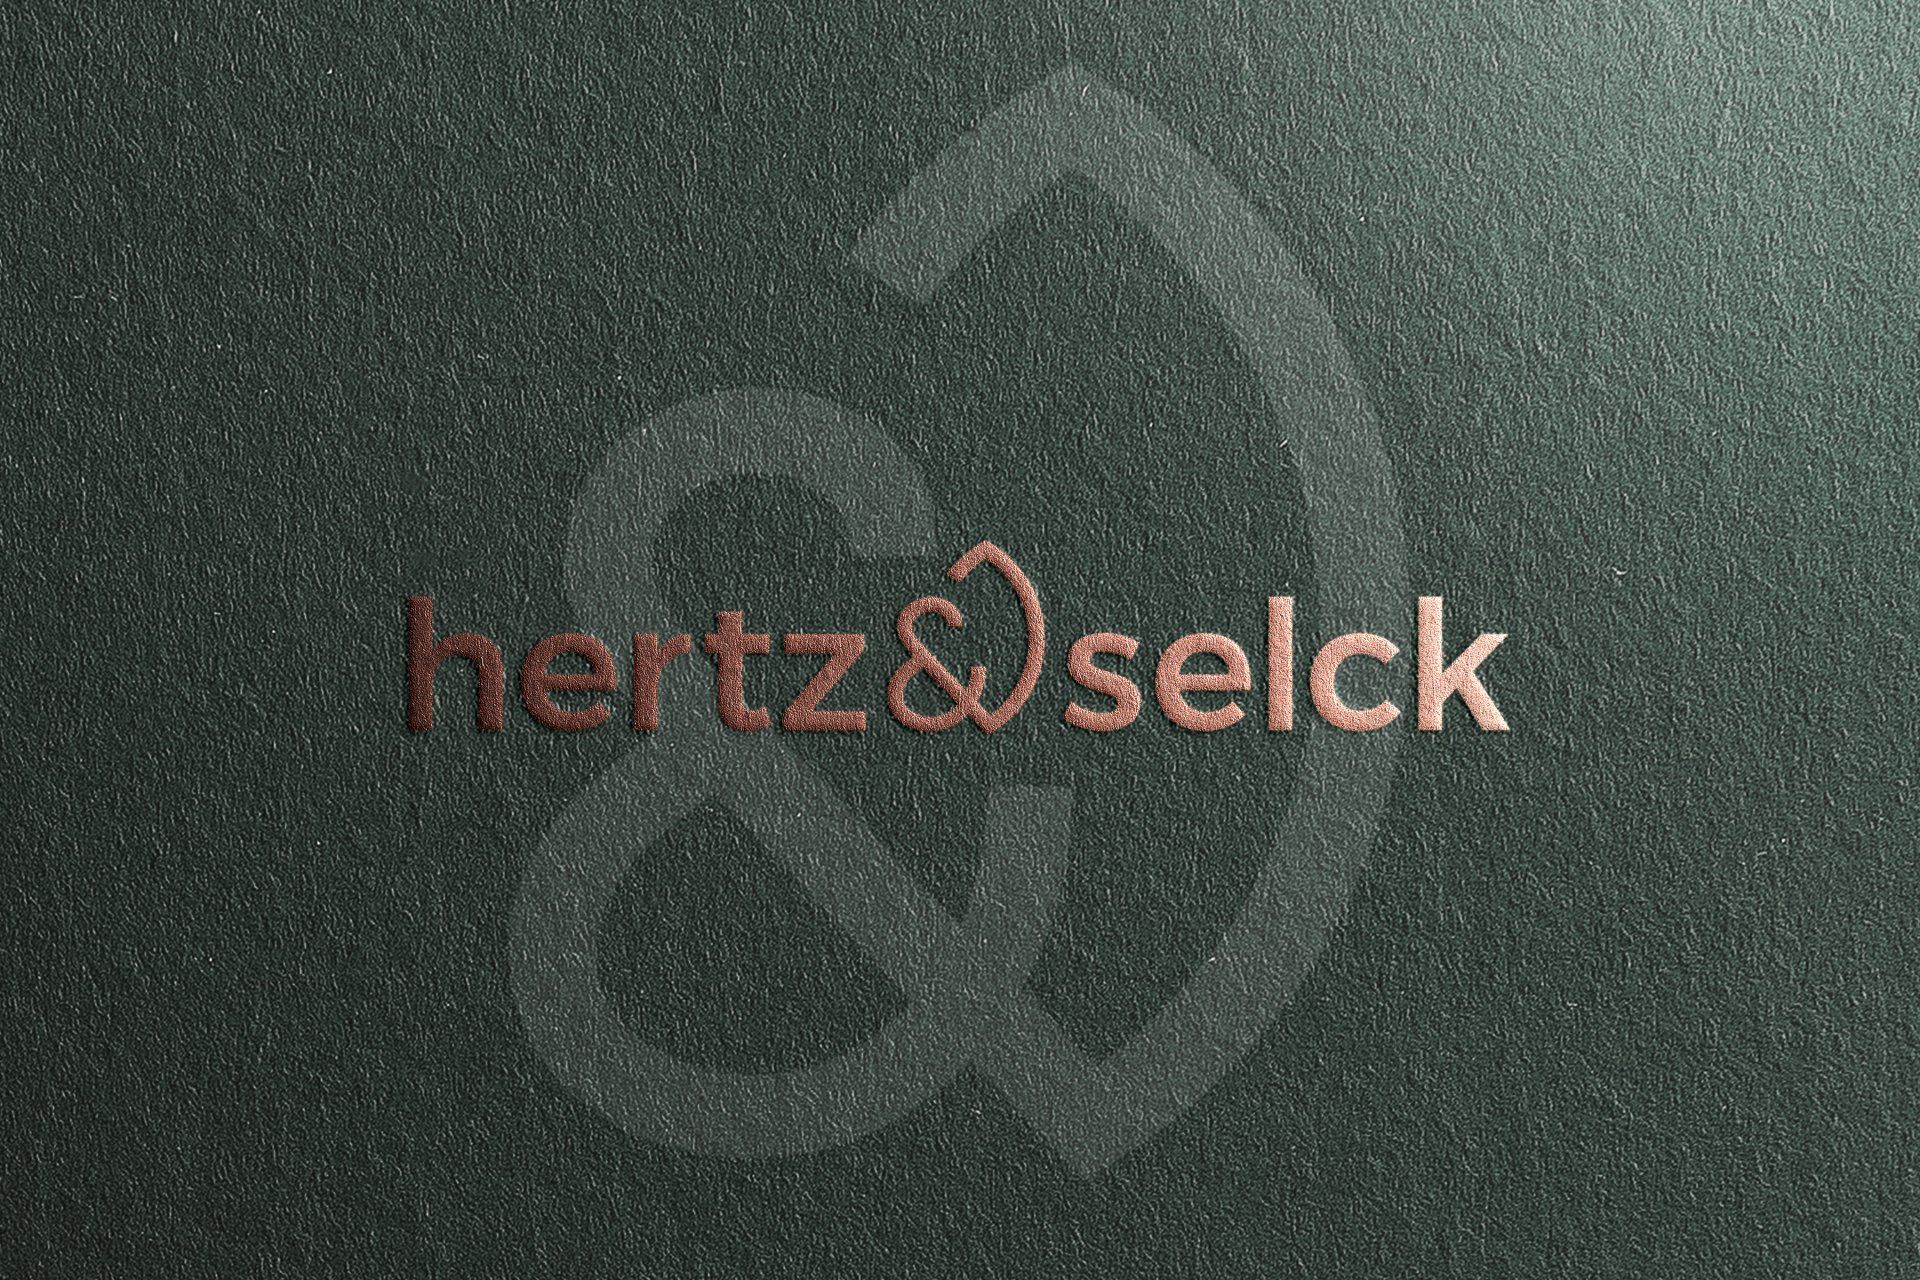 Hertz & Selck logo designed by FabianBrandDirection